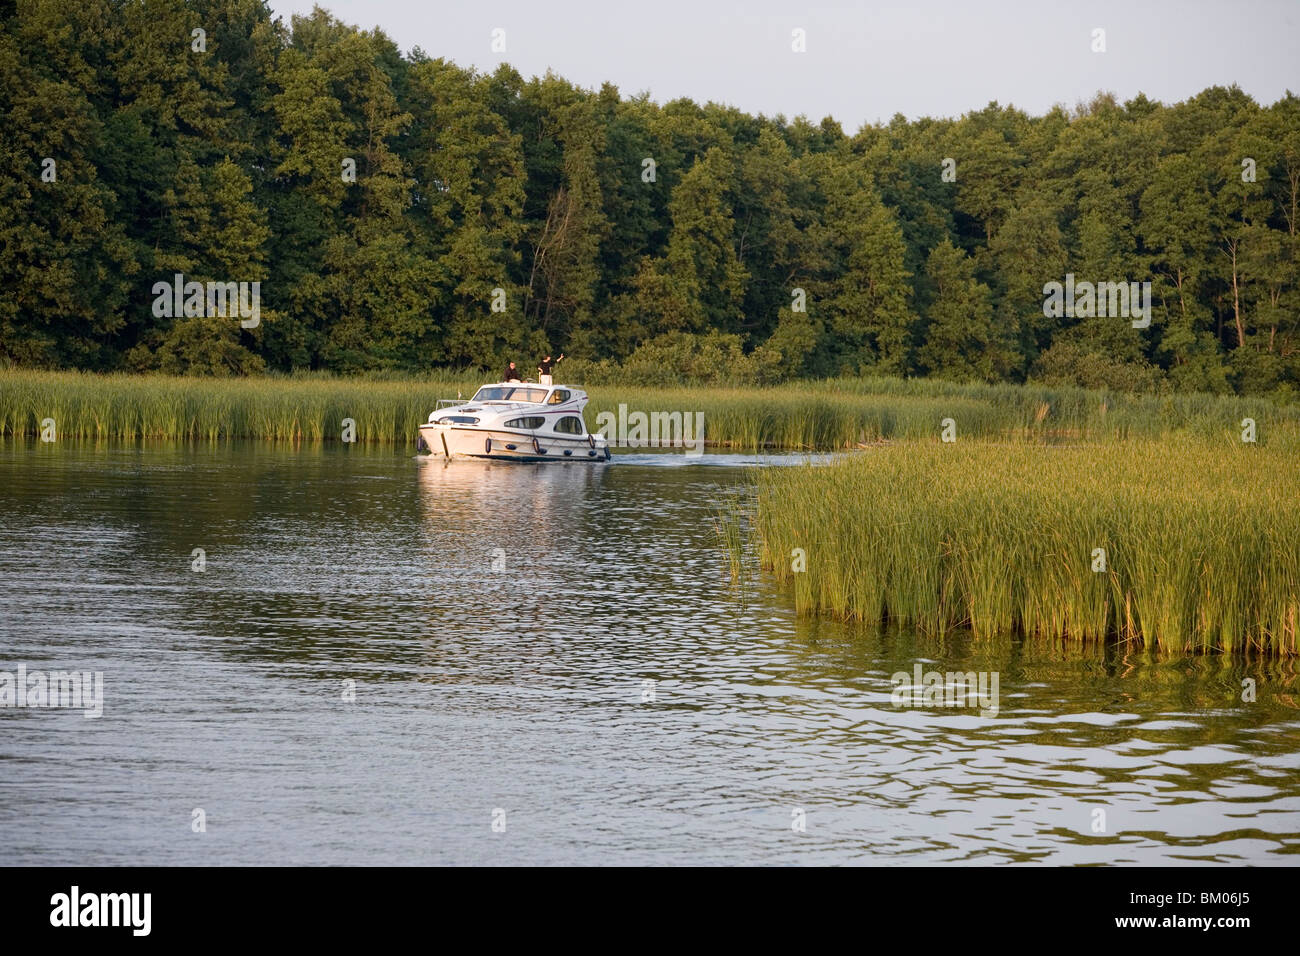 Connoisseur Caprice Houseboat on River Dahme, Near Zernsdorf, Brandenburg, Germany Stock Photo